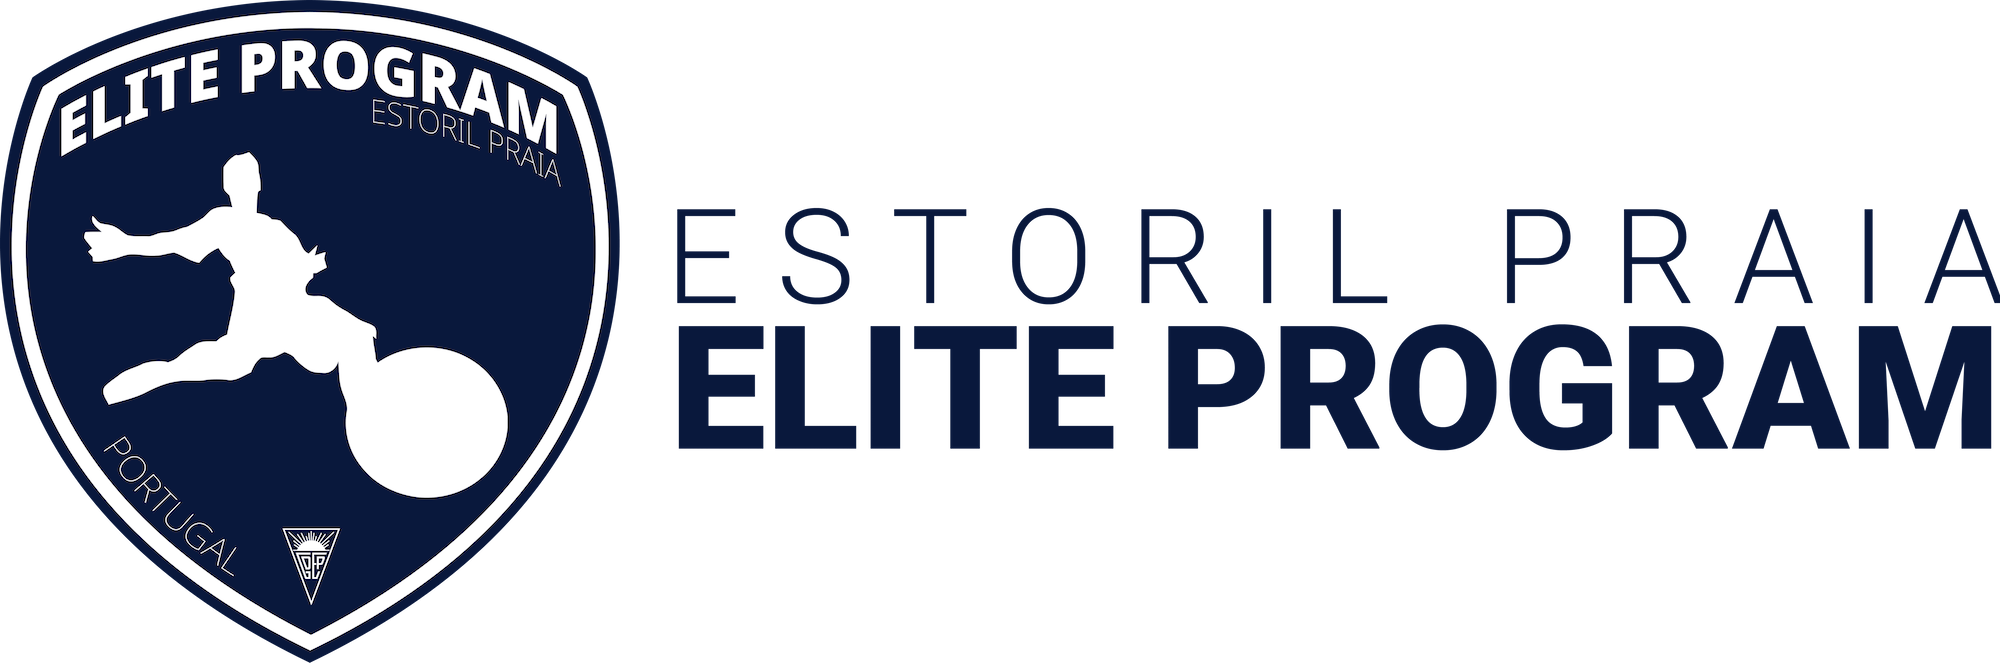 Estoril Elite Program